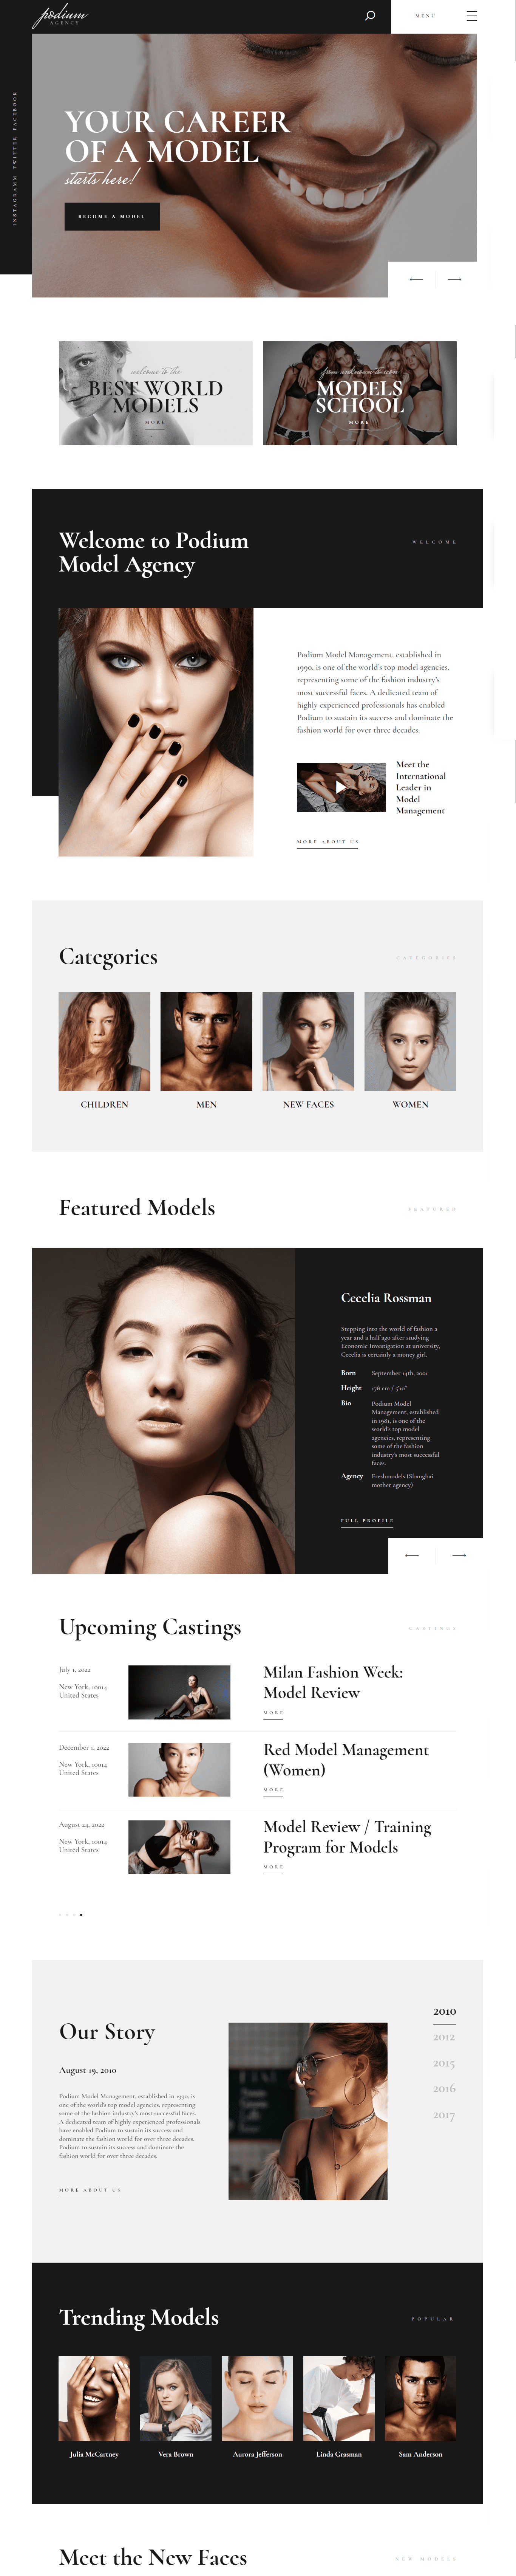 podium model agency